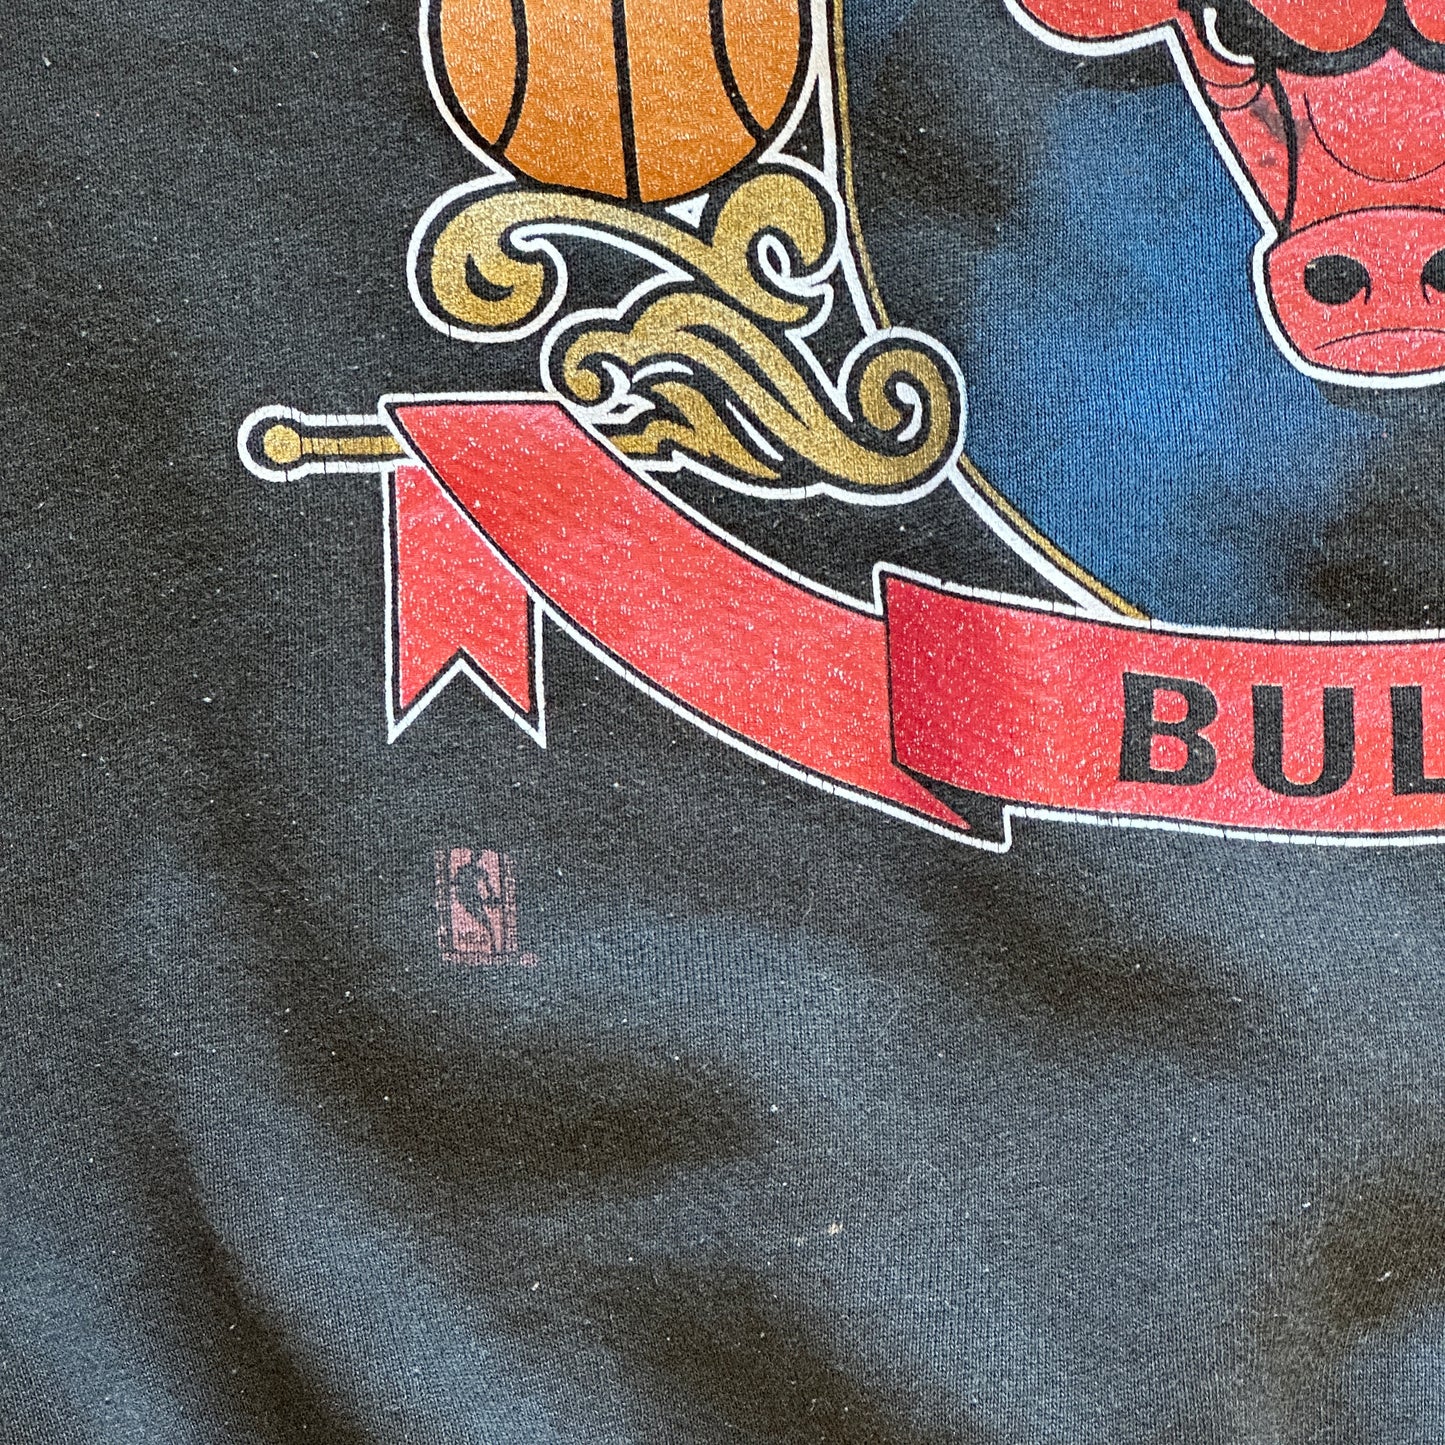 90' Chicago Bulls Crewneck